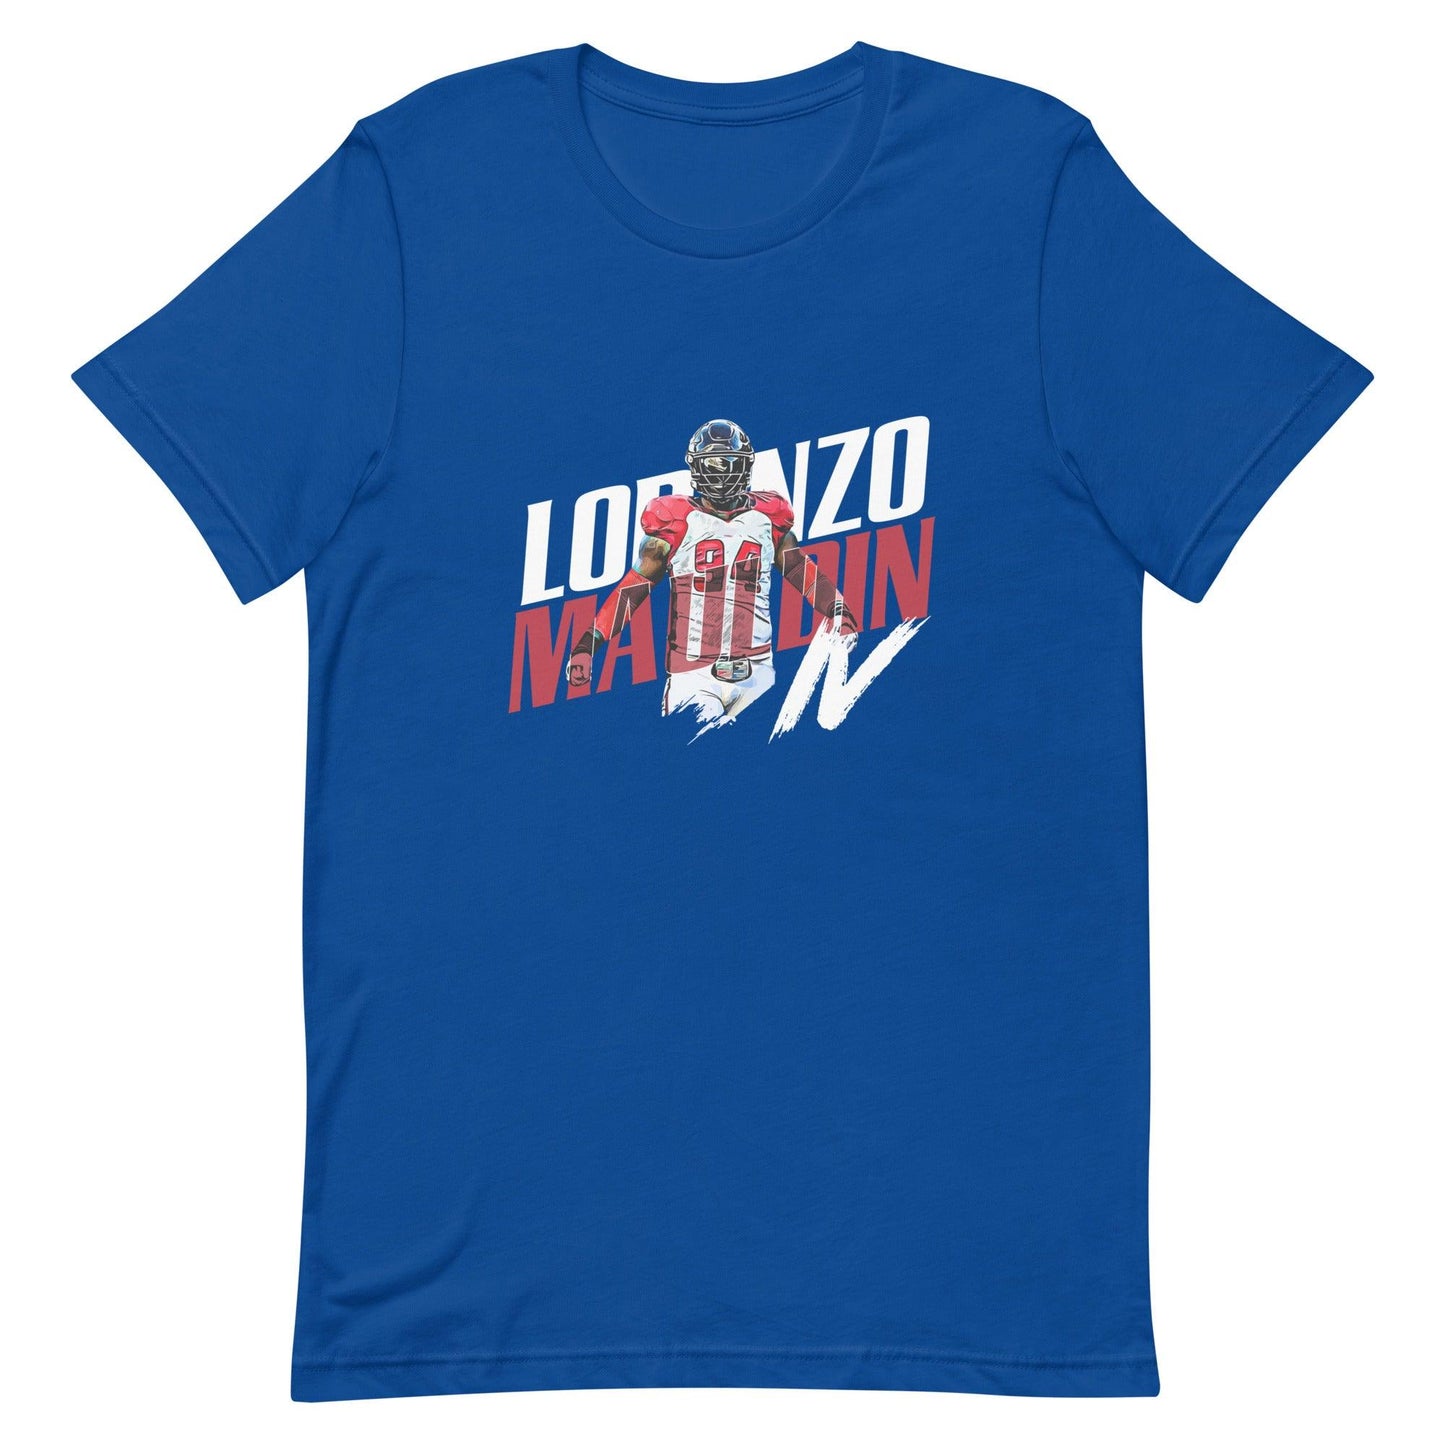 Lorenzo Mauldin IV "Gameday" t-shirt - Fan Arch